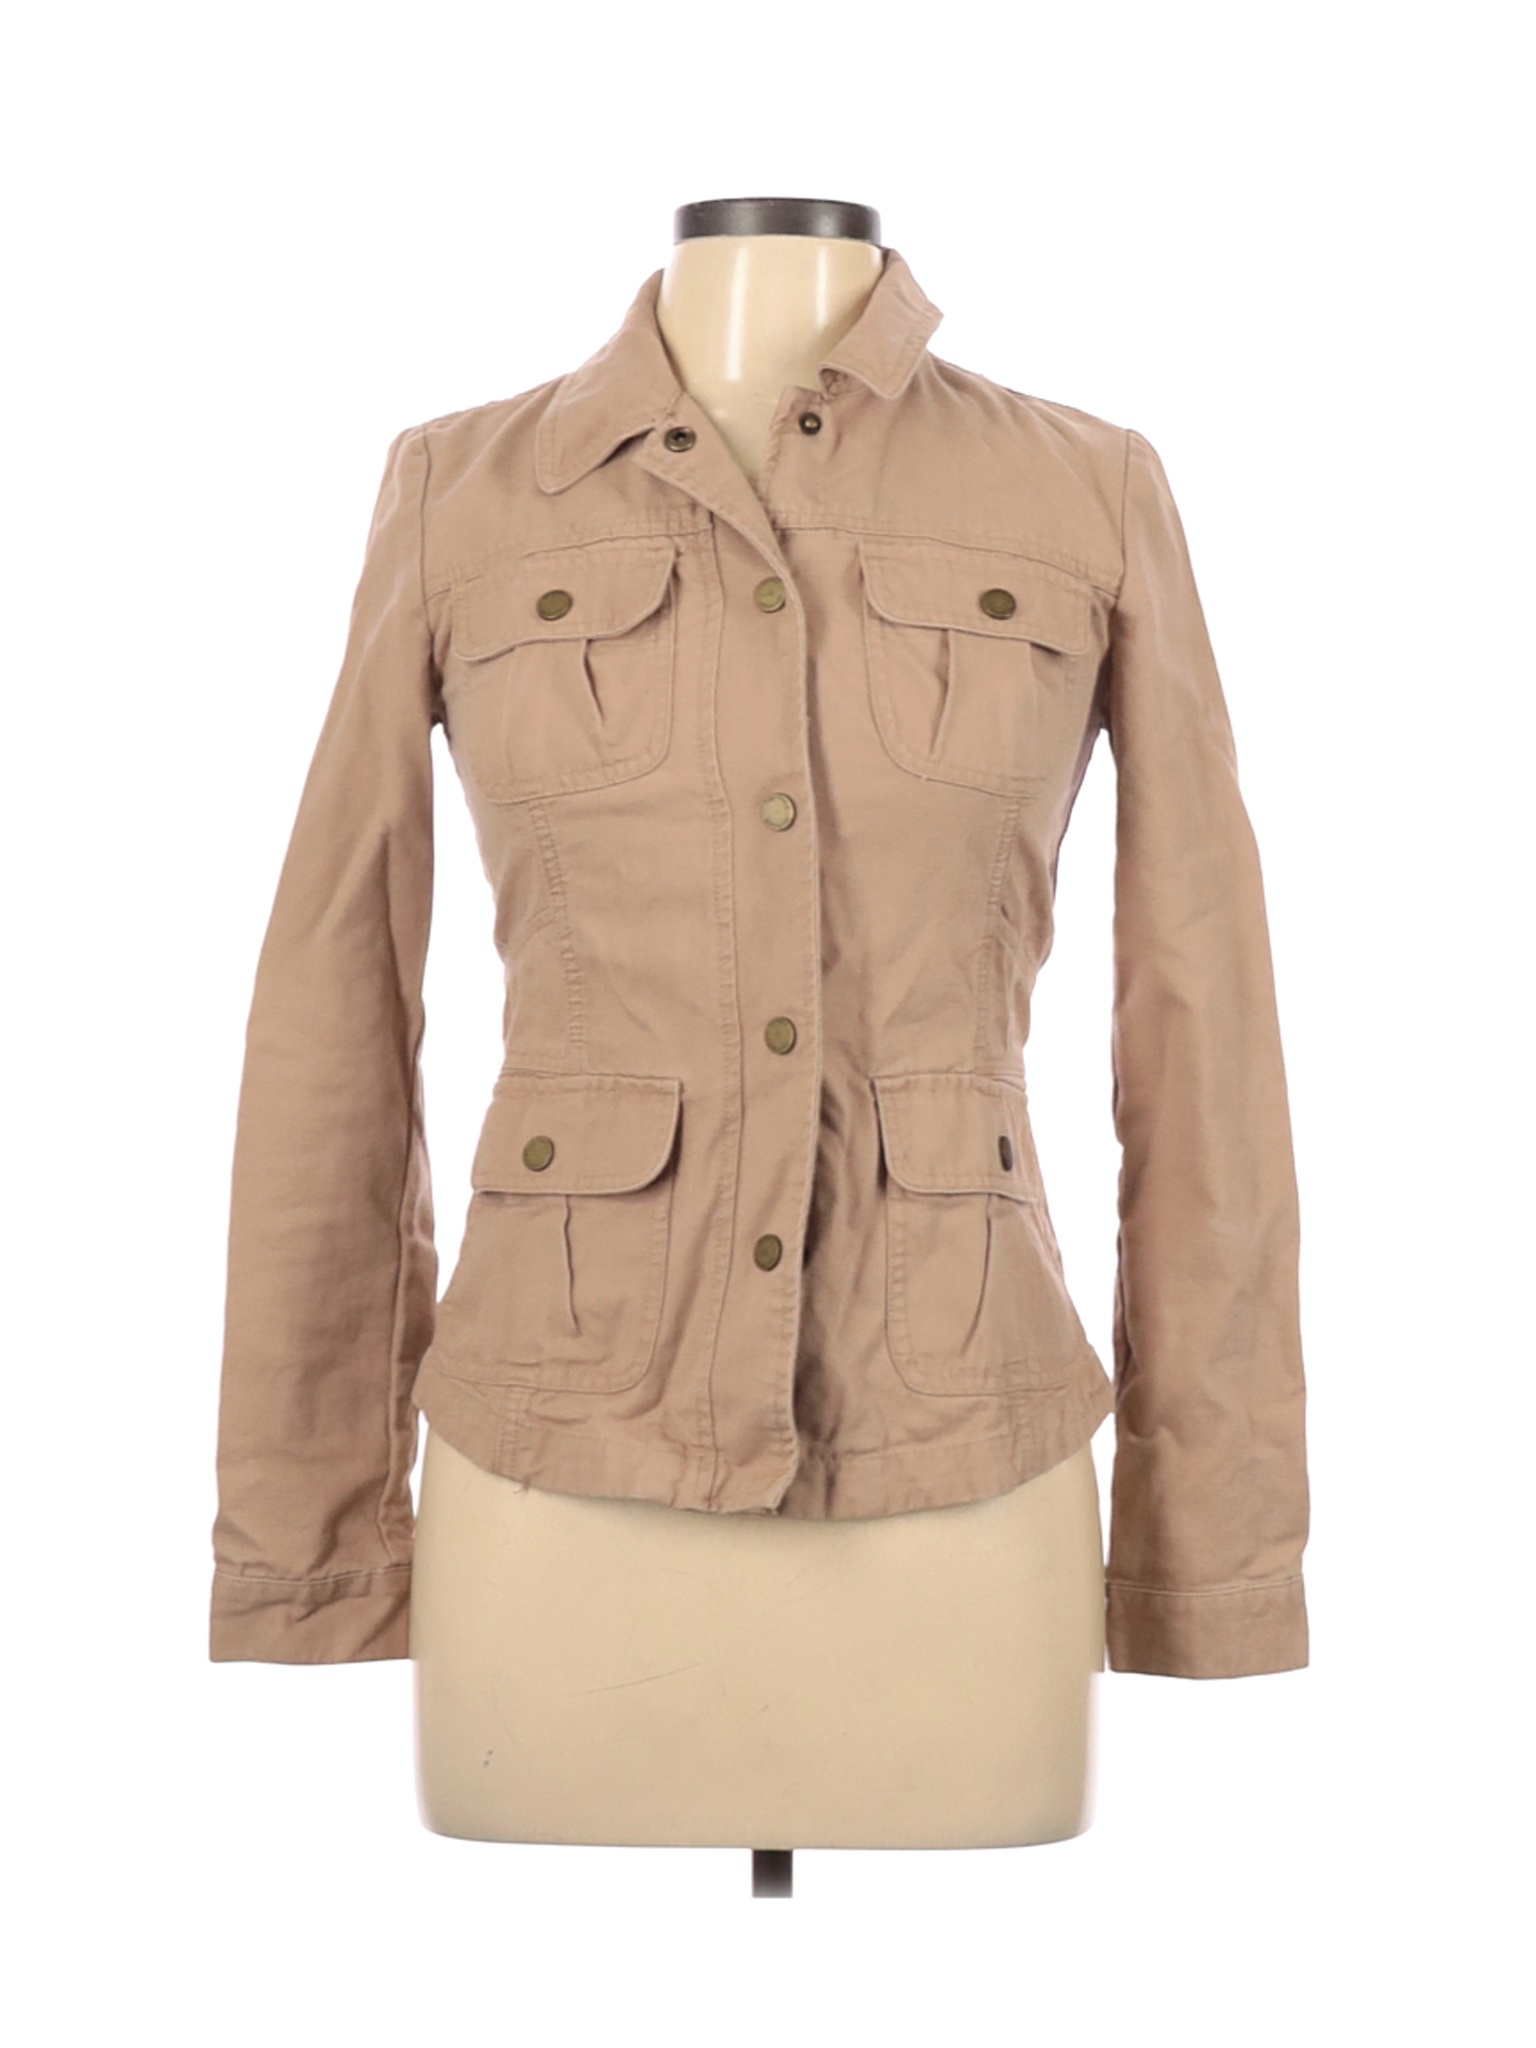 Tommy Hilfiger Women Brown Jacket XS | eBay